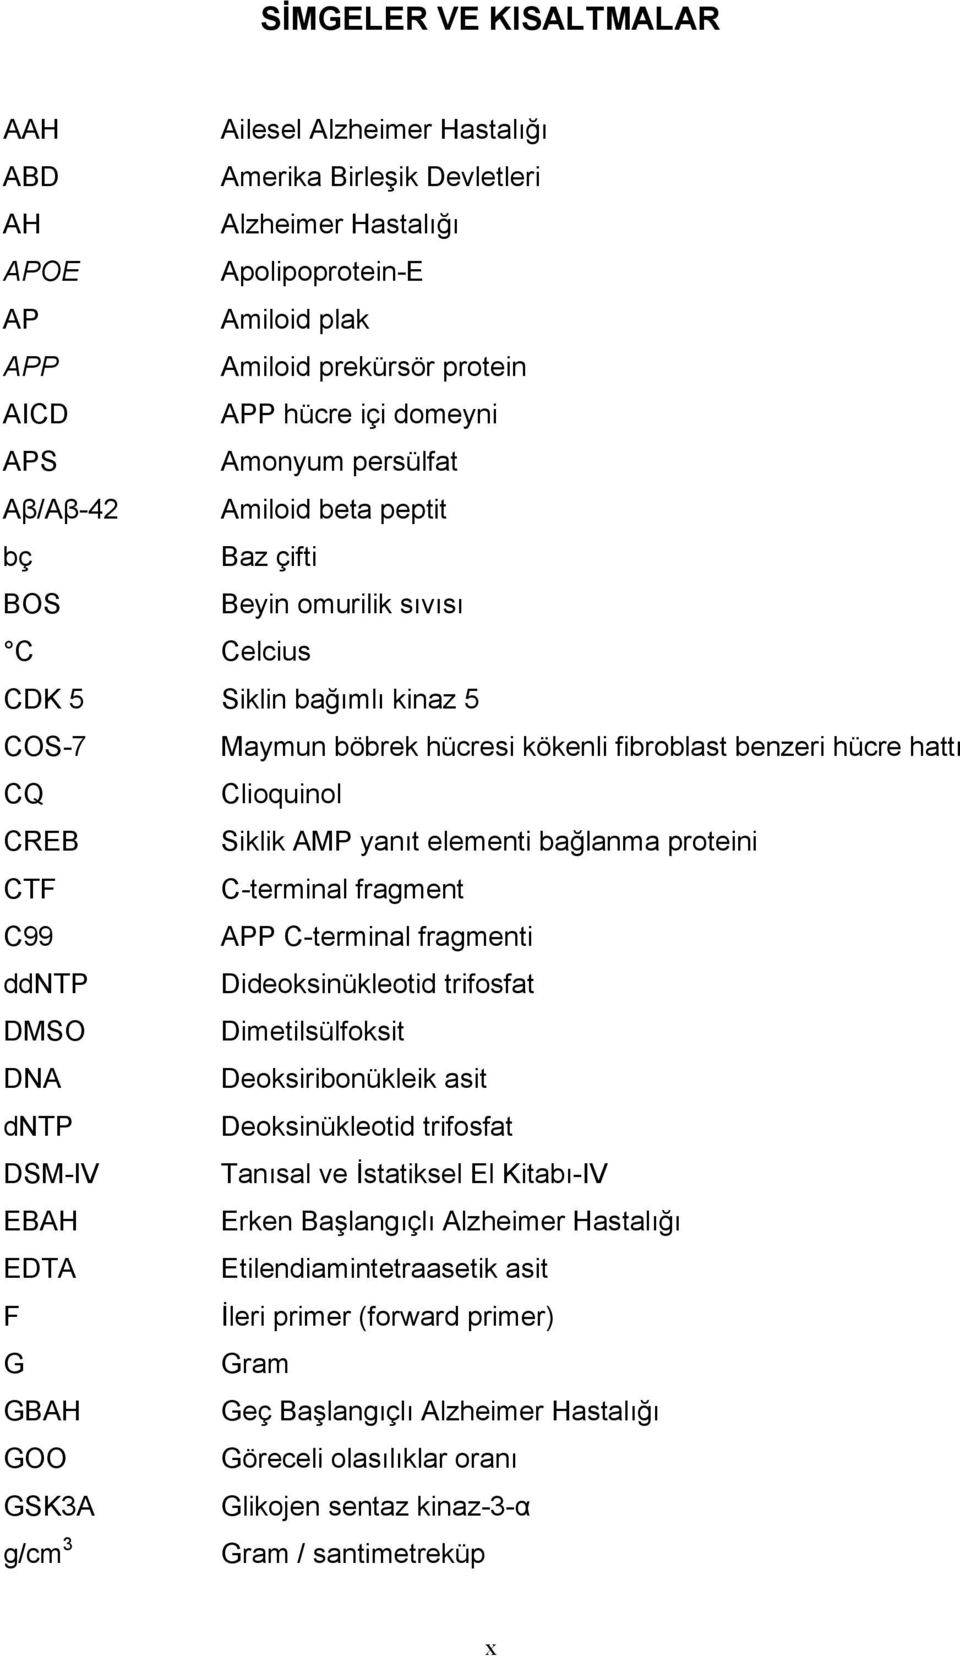 hattı CQ Clioquinol CREB Siklik AMP yanıt elementi bağlanma proteini CTF C-terminal fragment C99 APP C-terminal fragmenti ddntp Dideoksinükleotid trifosfat DMSO Dimetilsülfoksit DNA Deoksiribonükleik